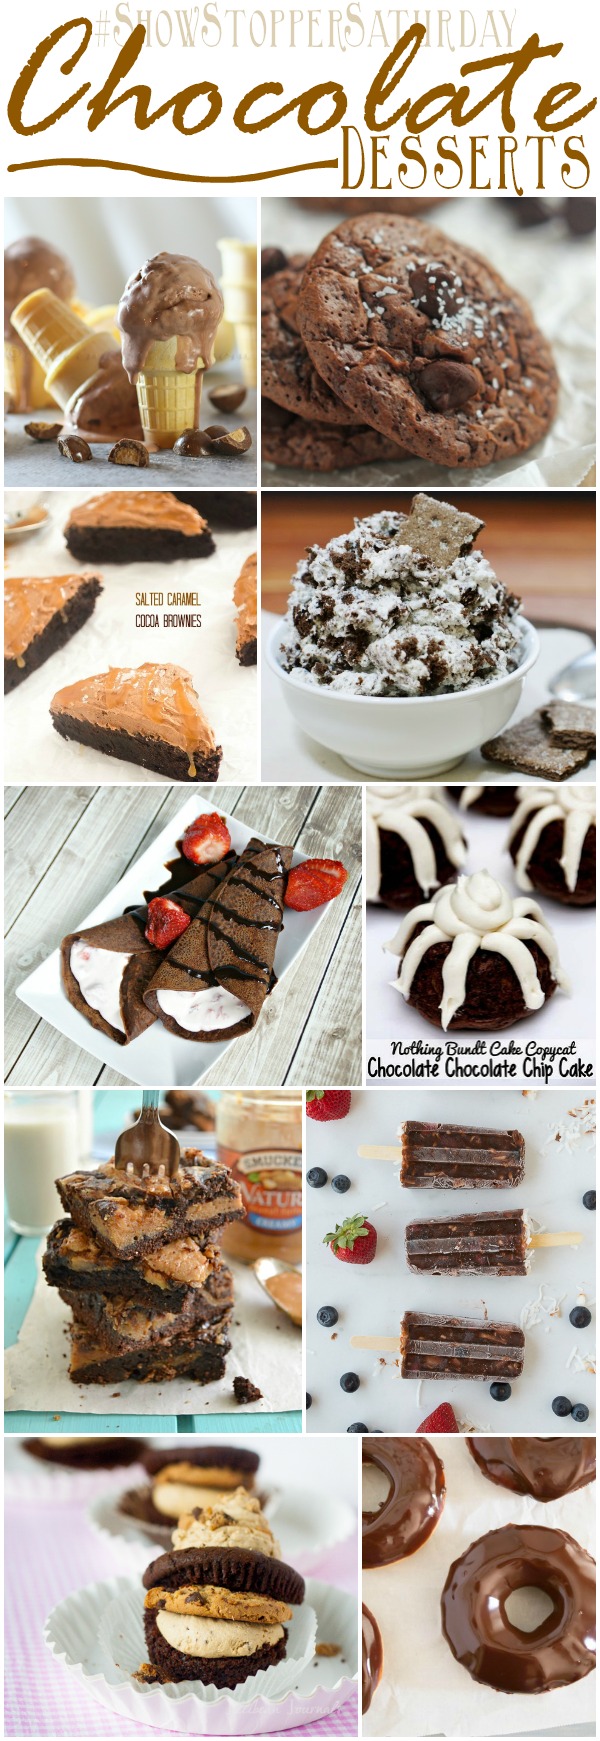 12 Chocolate Desserts to make! SimplyGloria.com #ShowStopperSaturday #chocolate